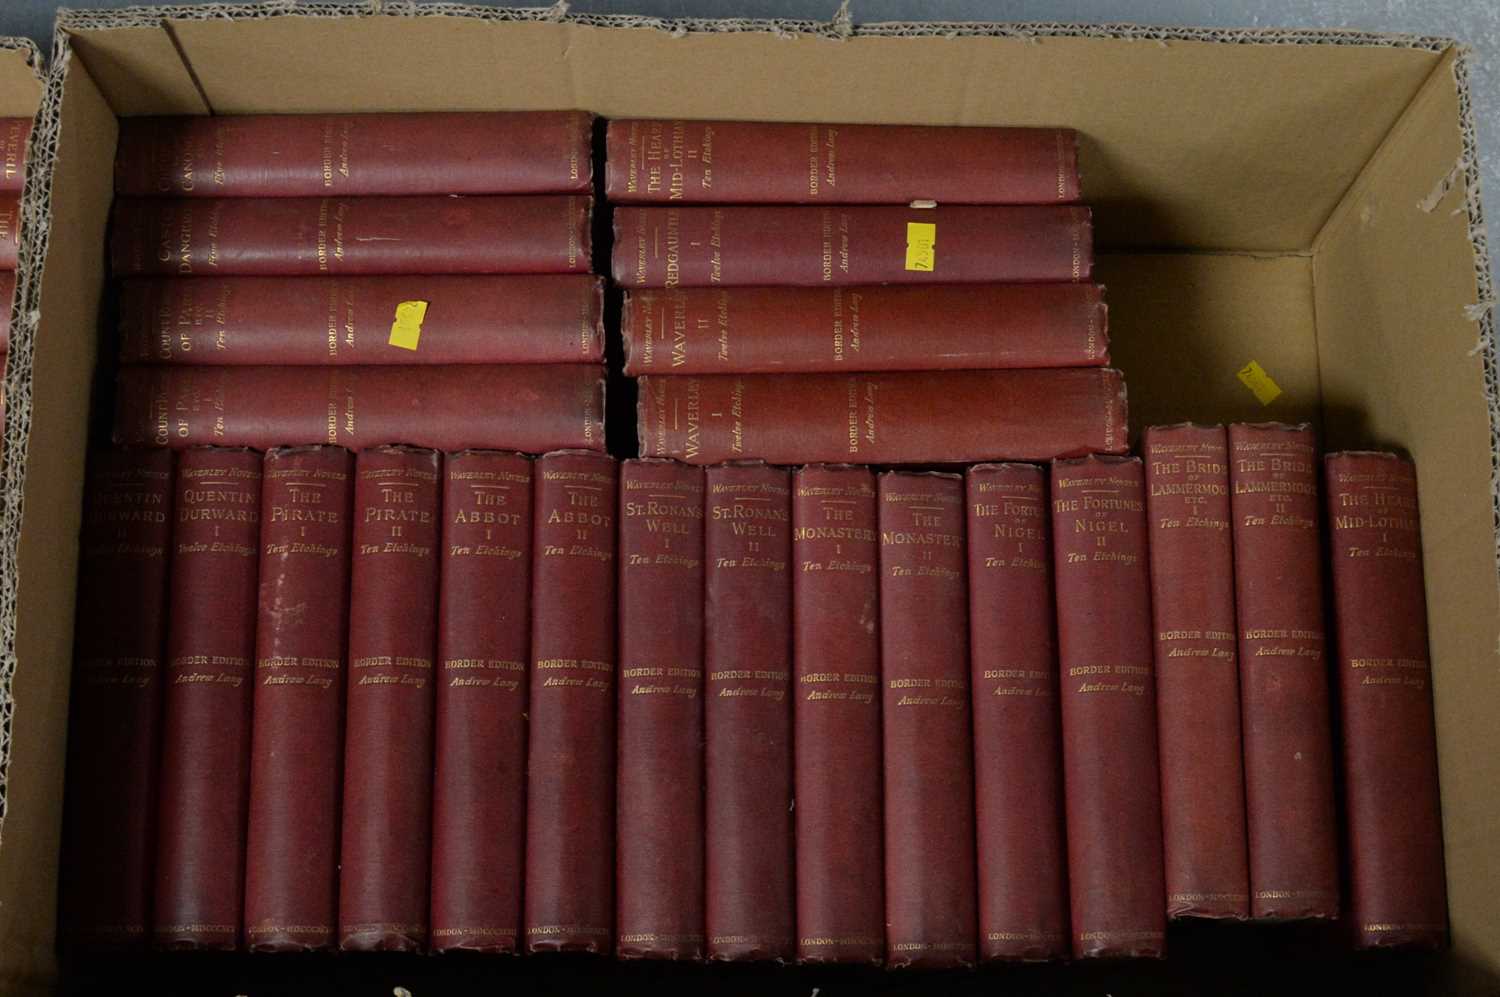 Sir Walter Scott The Waverley Novels The Border Edition, 48 vols - Image 3 of 3